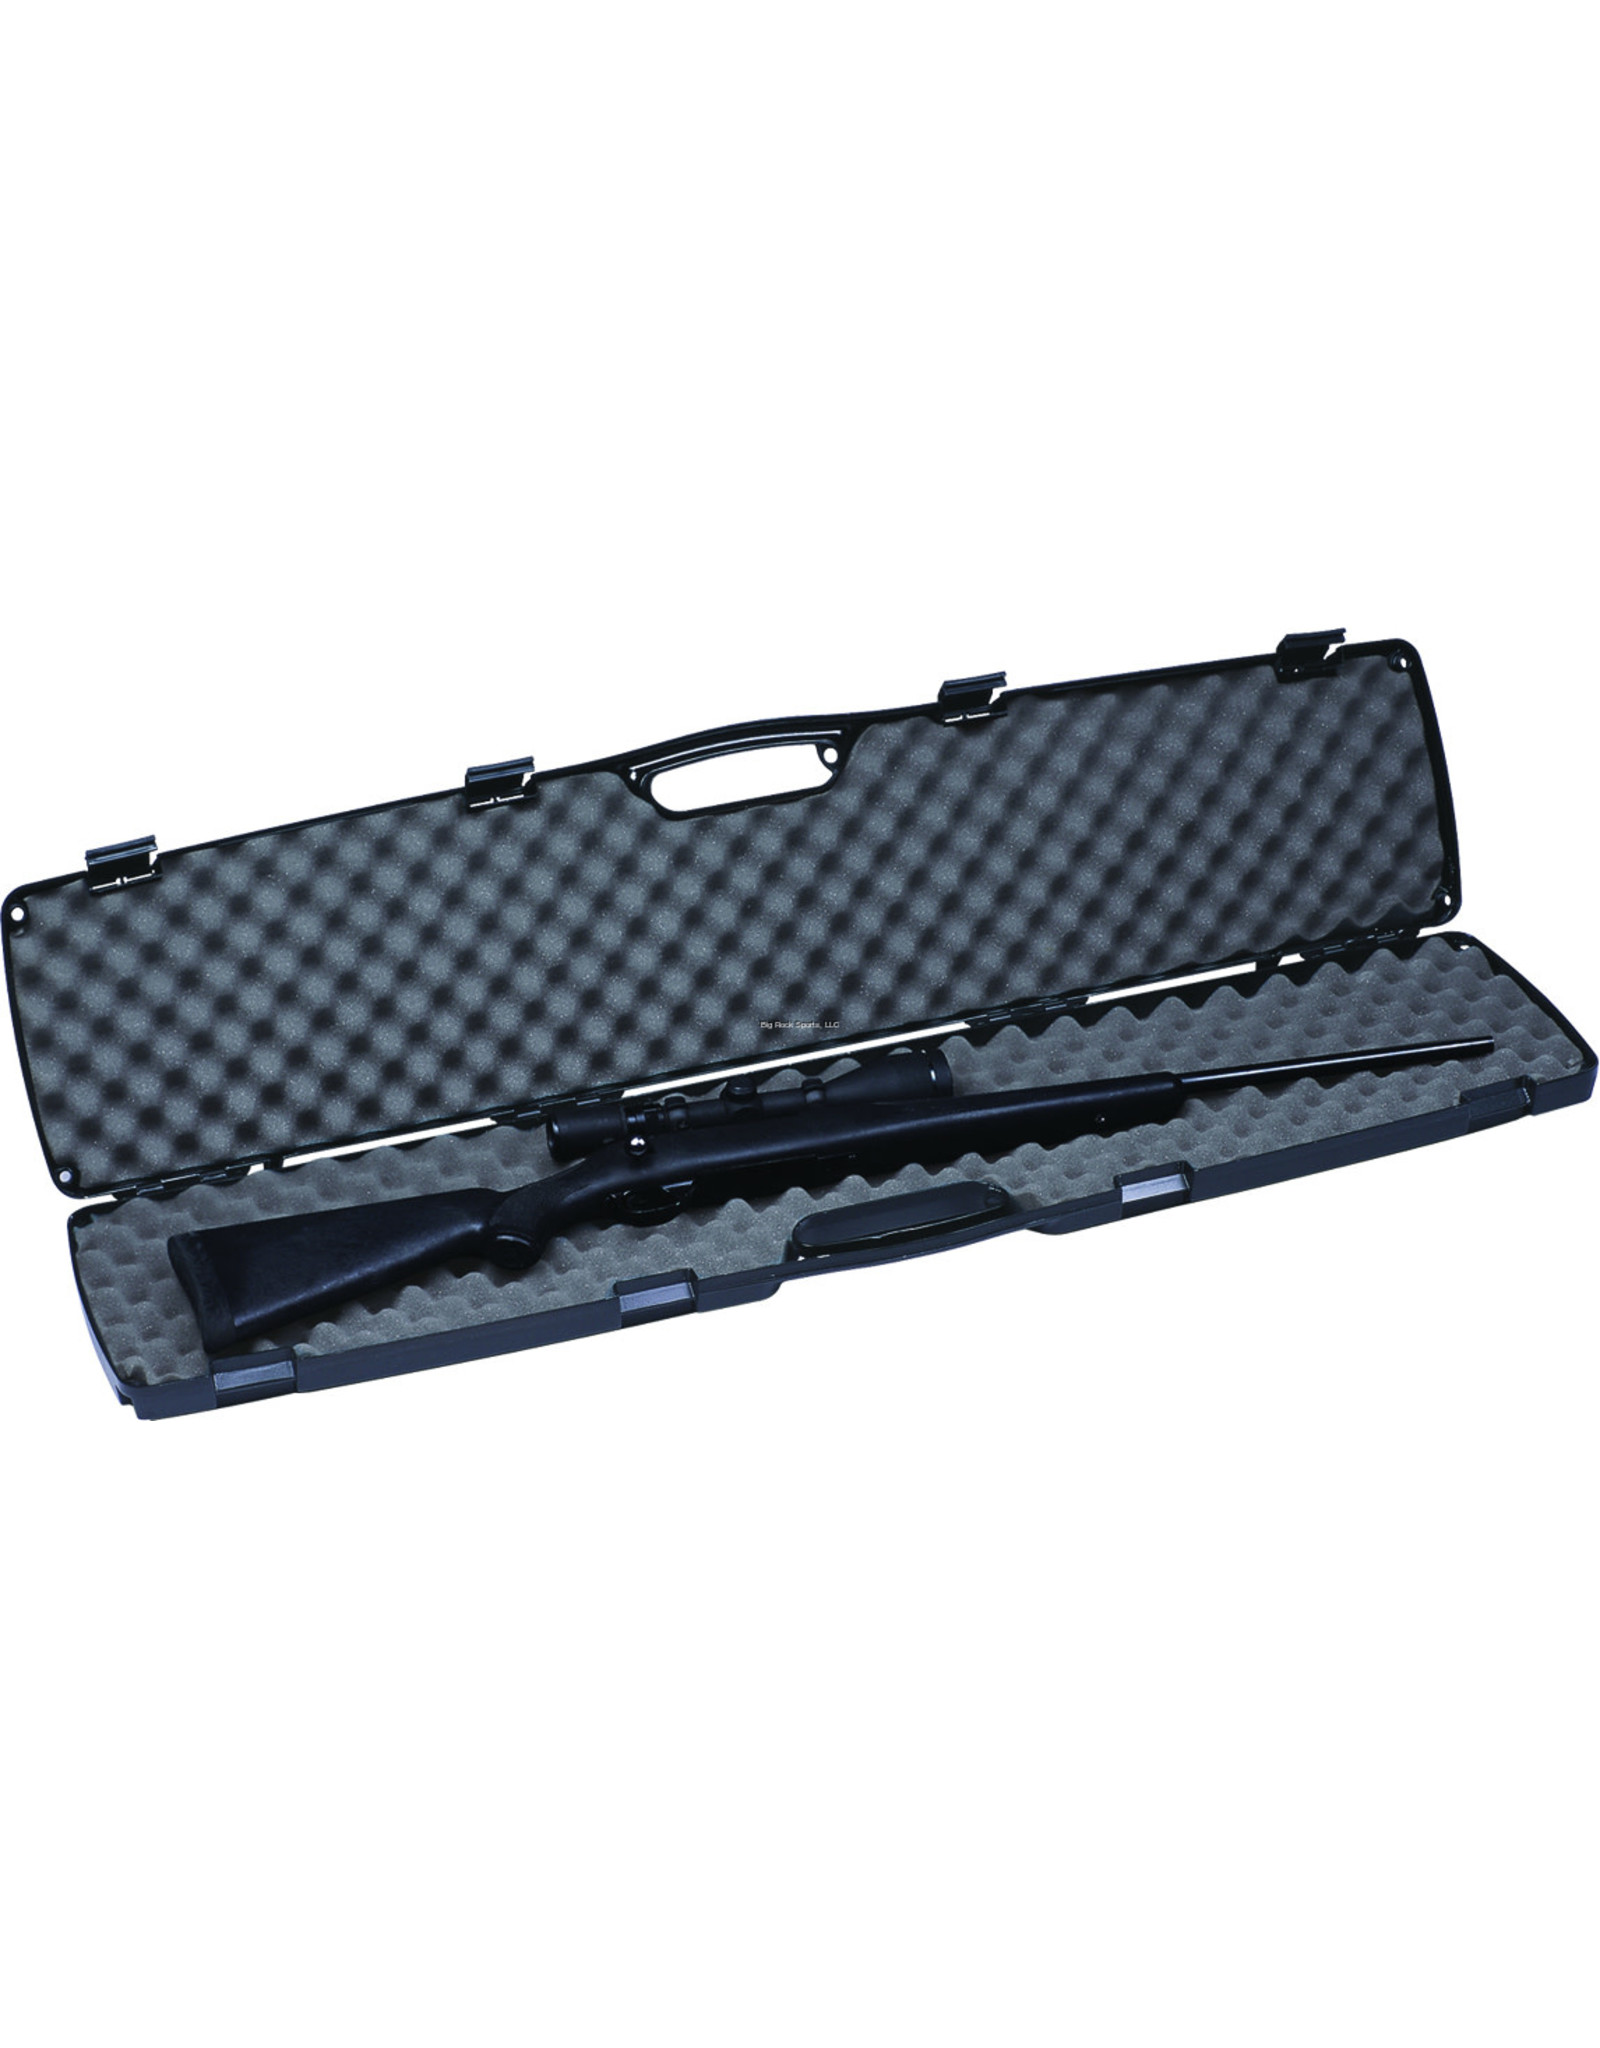 Plano Plano 1010475 SE Series Single Scoped Rifle Case, Black, 48" (140639)